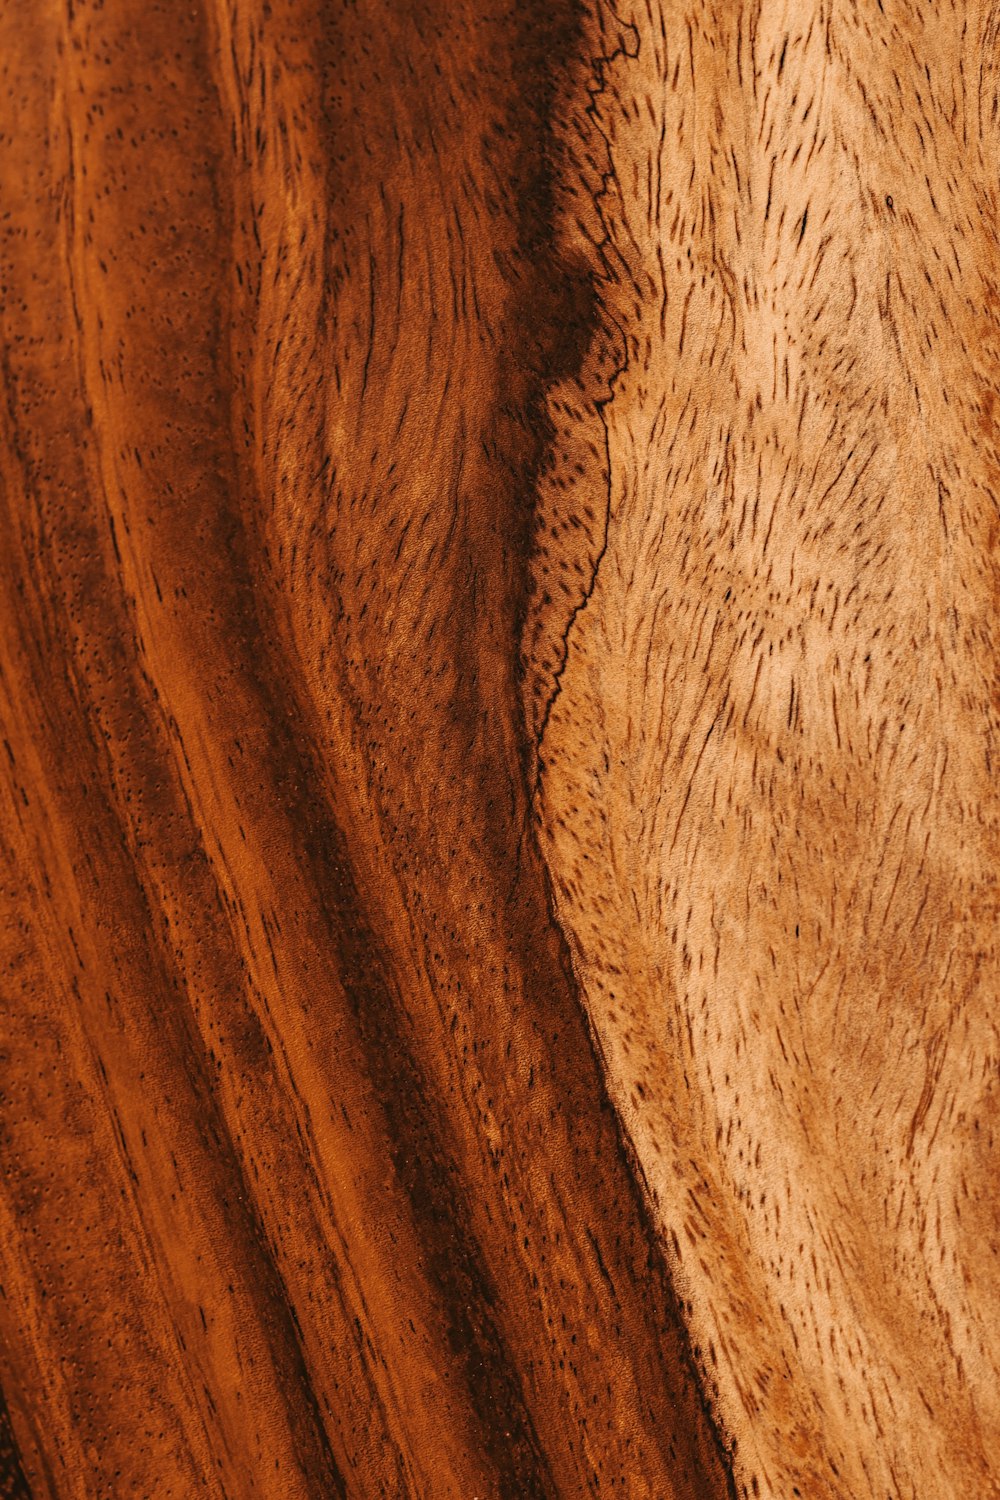 a close up of a wood grain texture